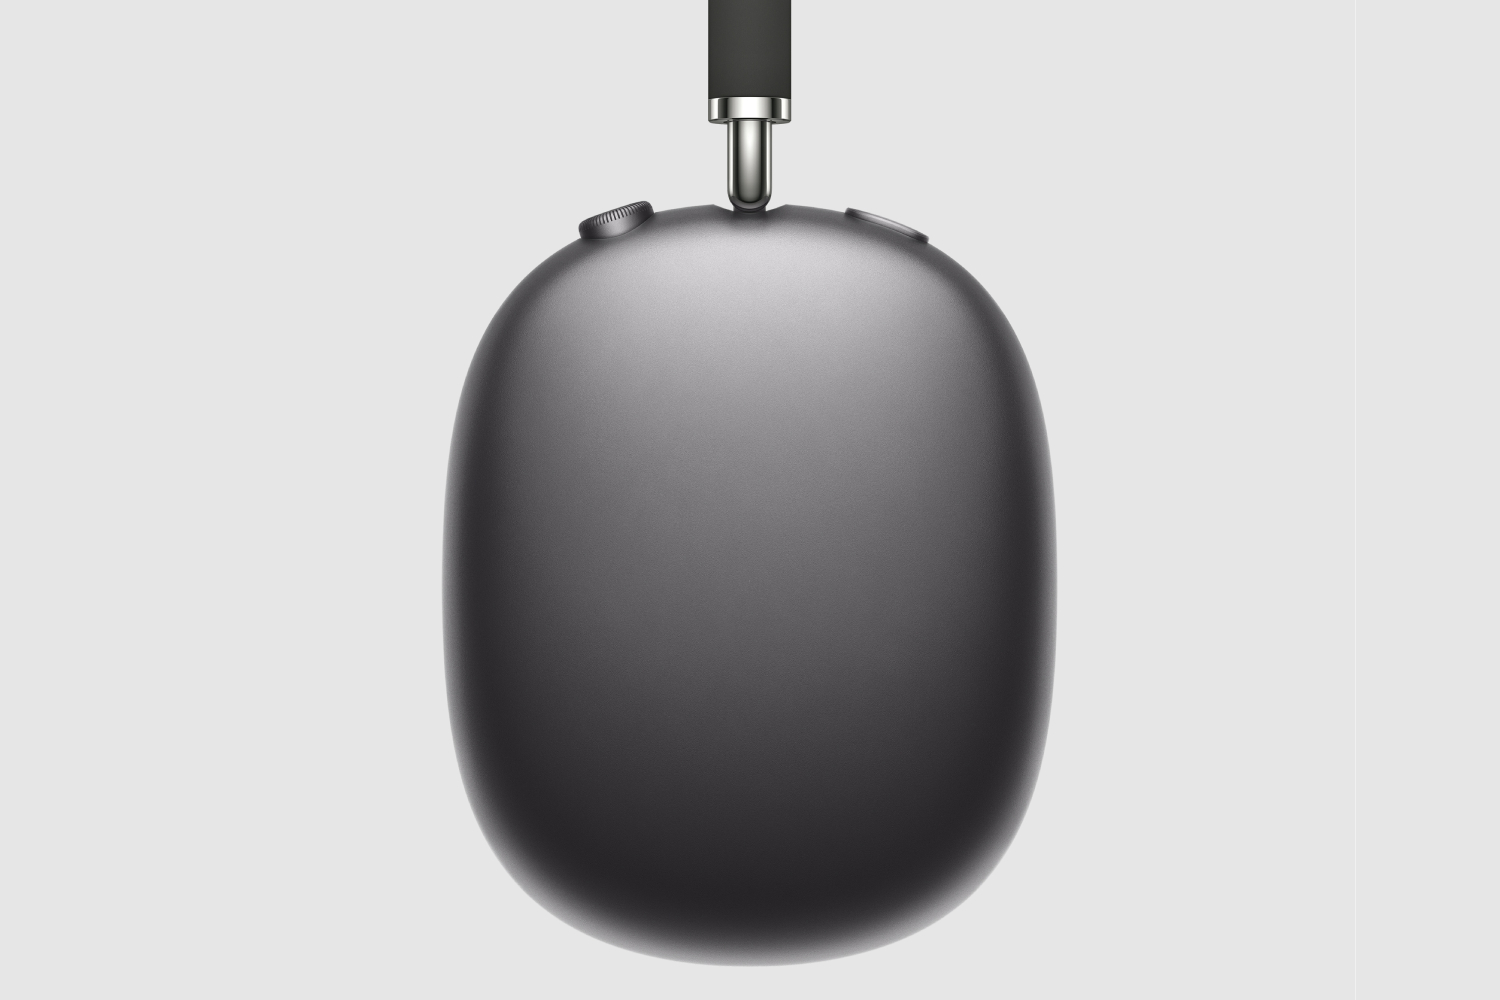 apple airpods max,apple,headphone,หูฟังไร้สาย,spatial audio,ระบบเสียงตามตำแหน่ง,ios